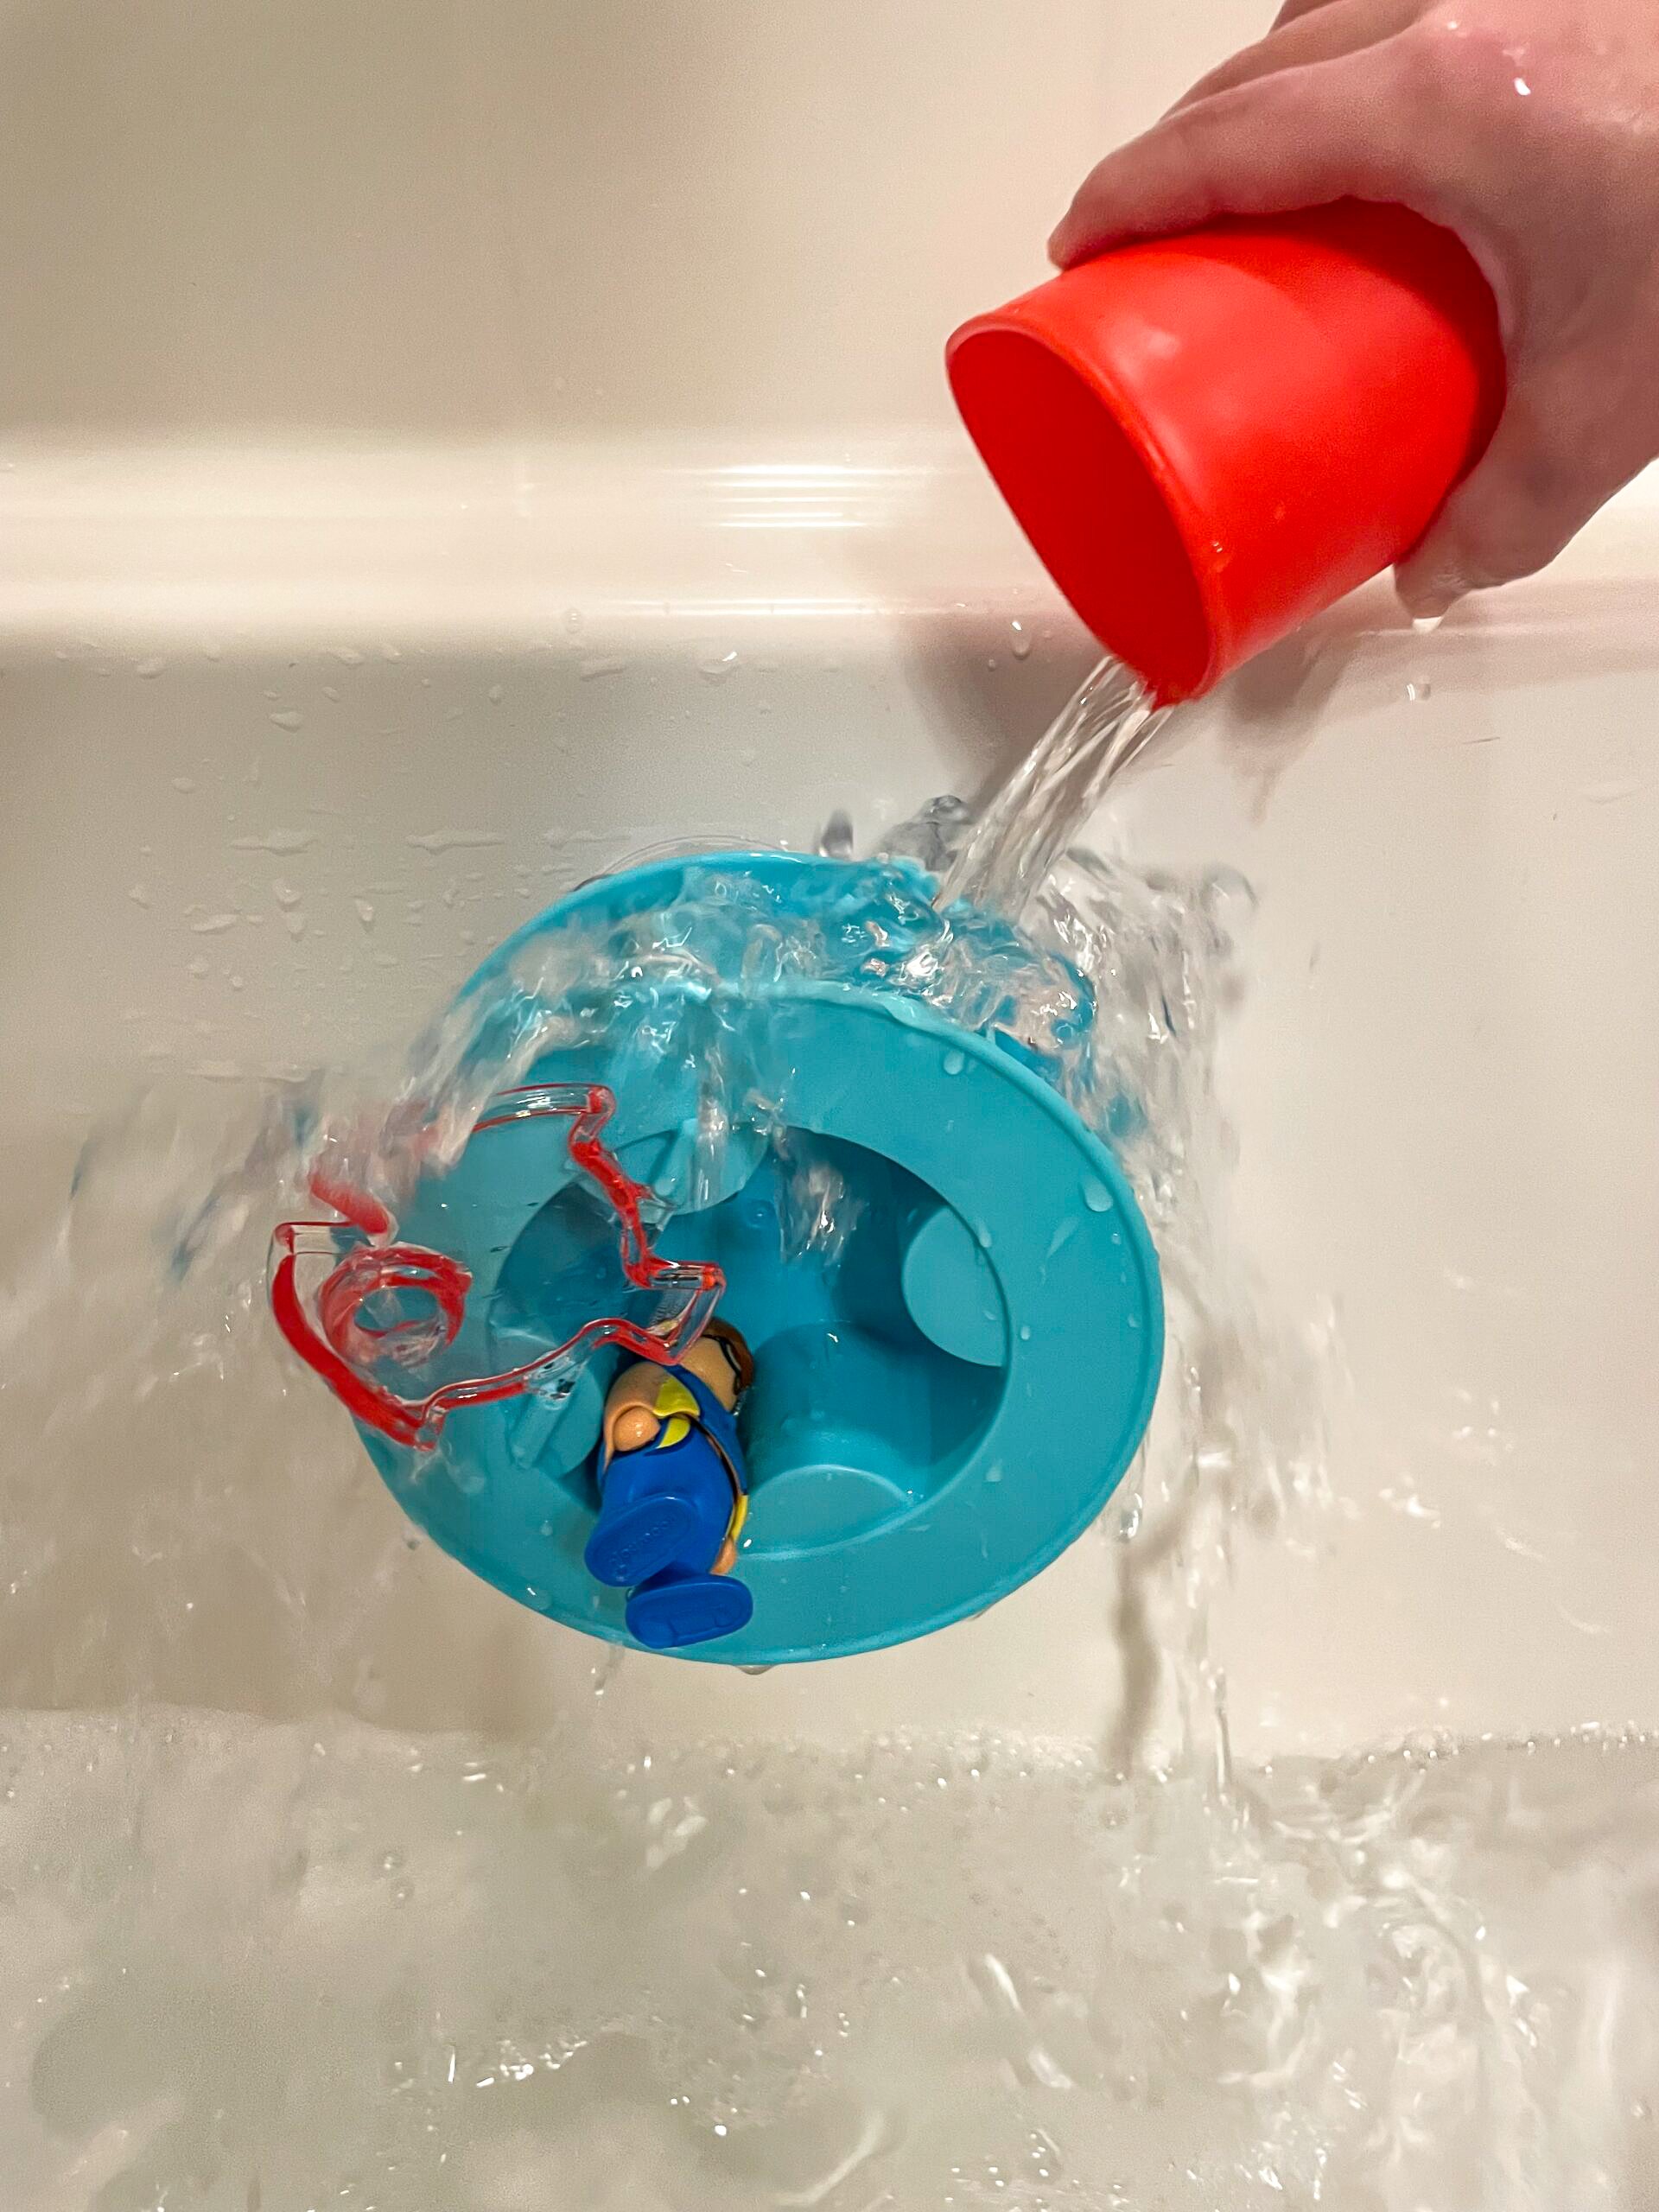 playmobil figure in water wheel